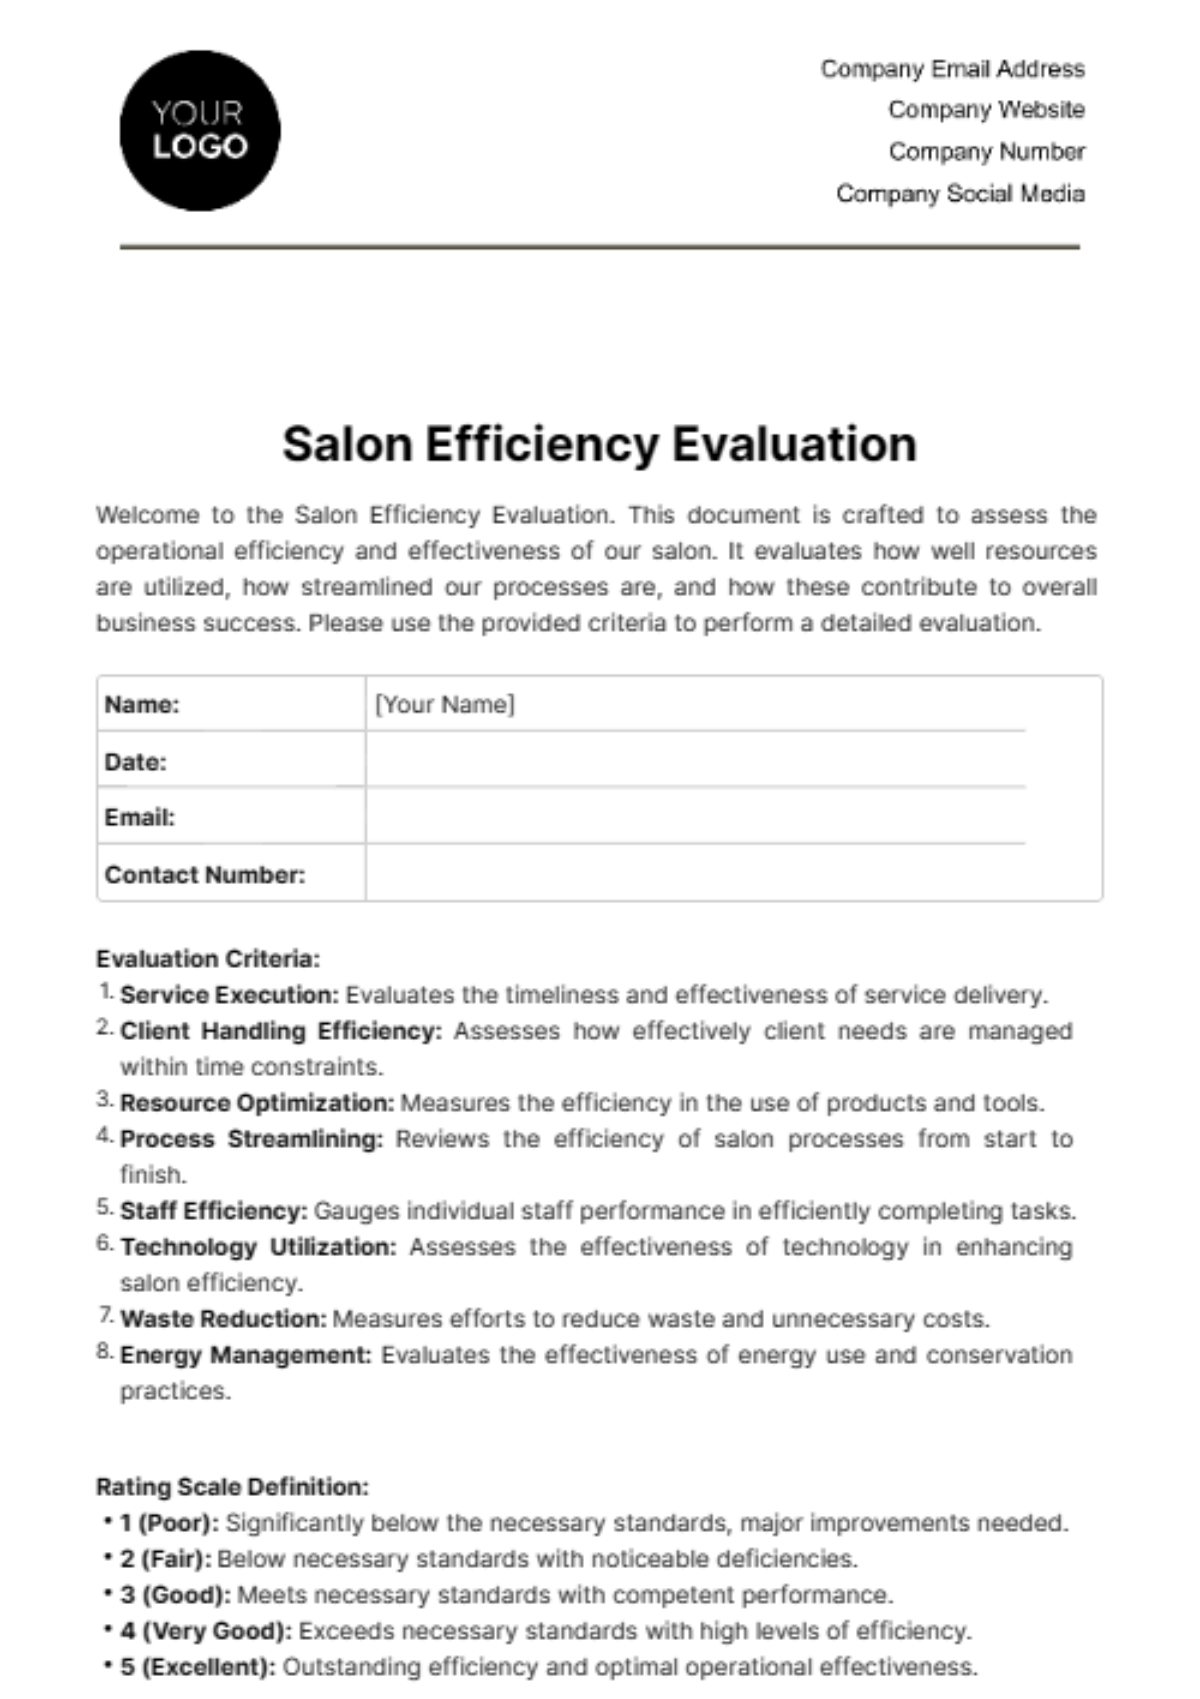 Free Salon Efficiency Evaluation Template